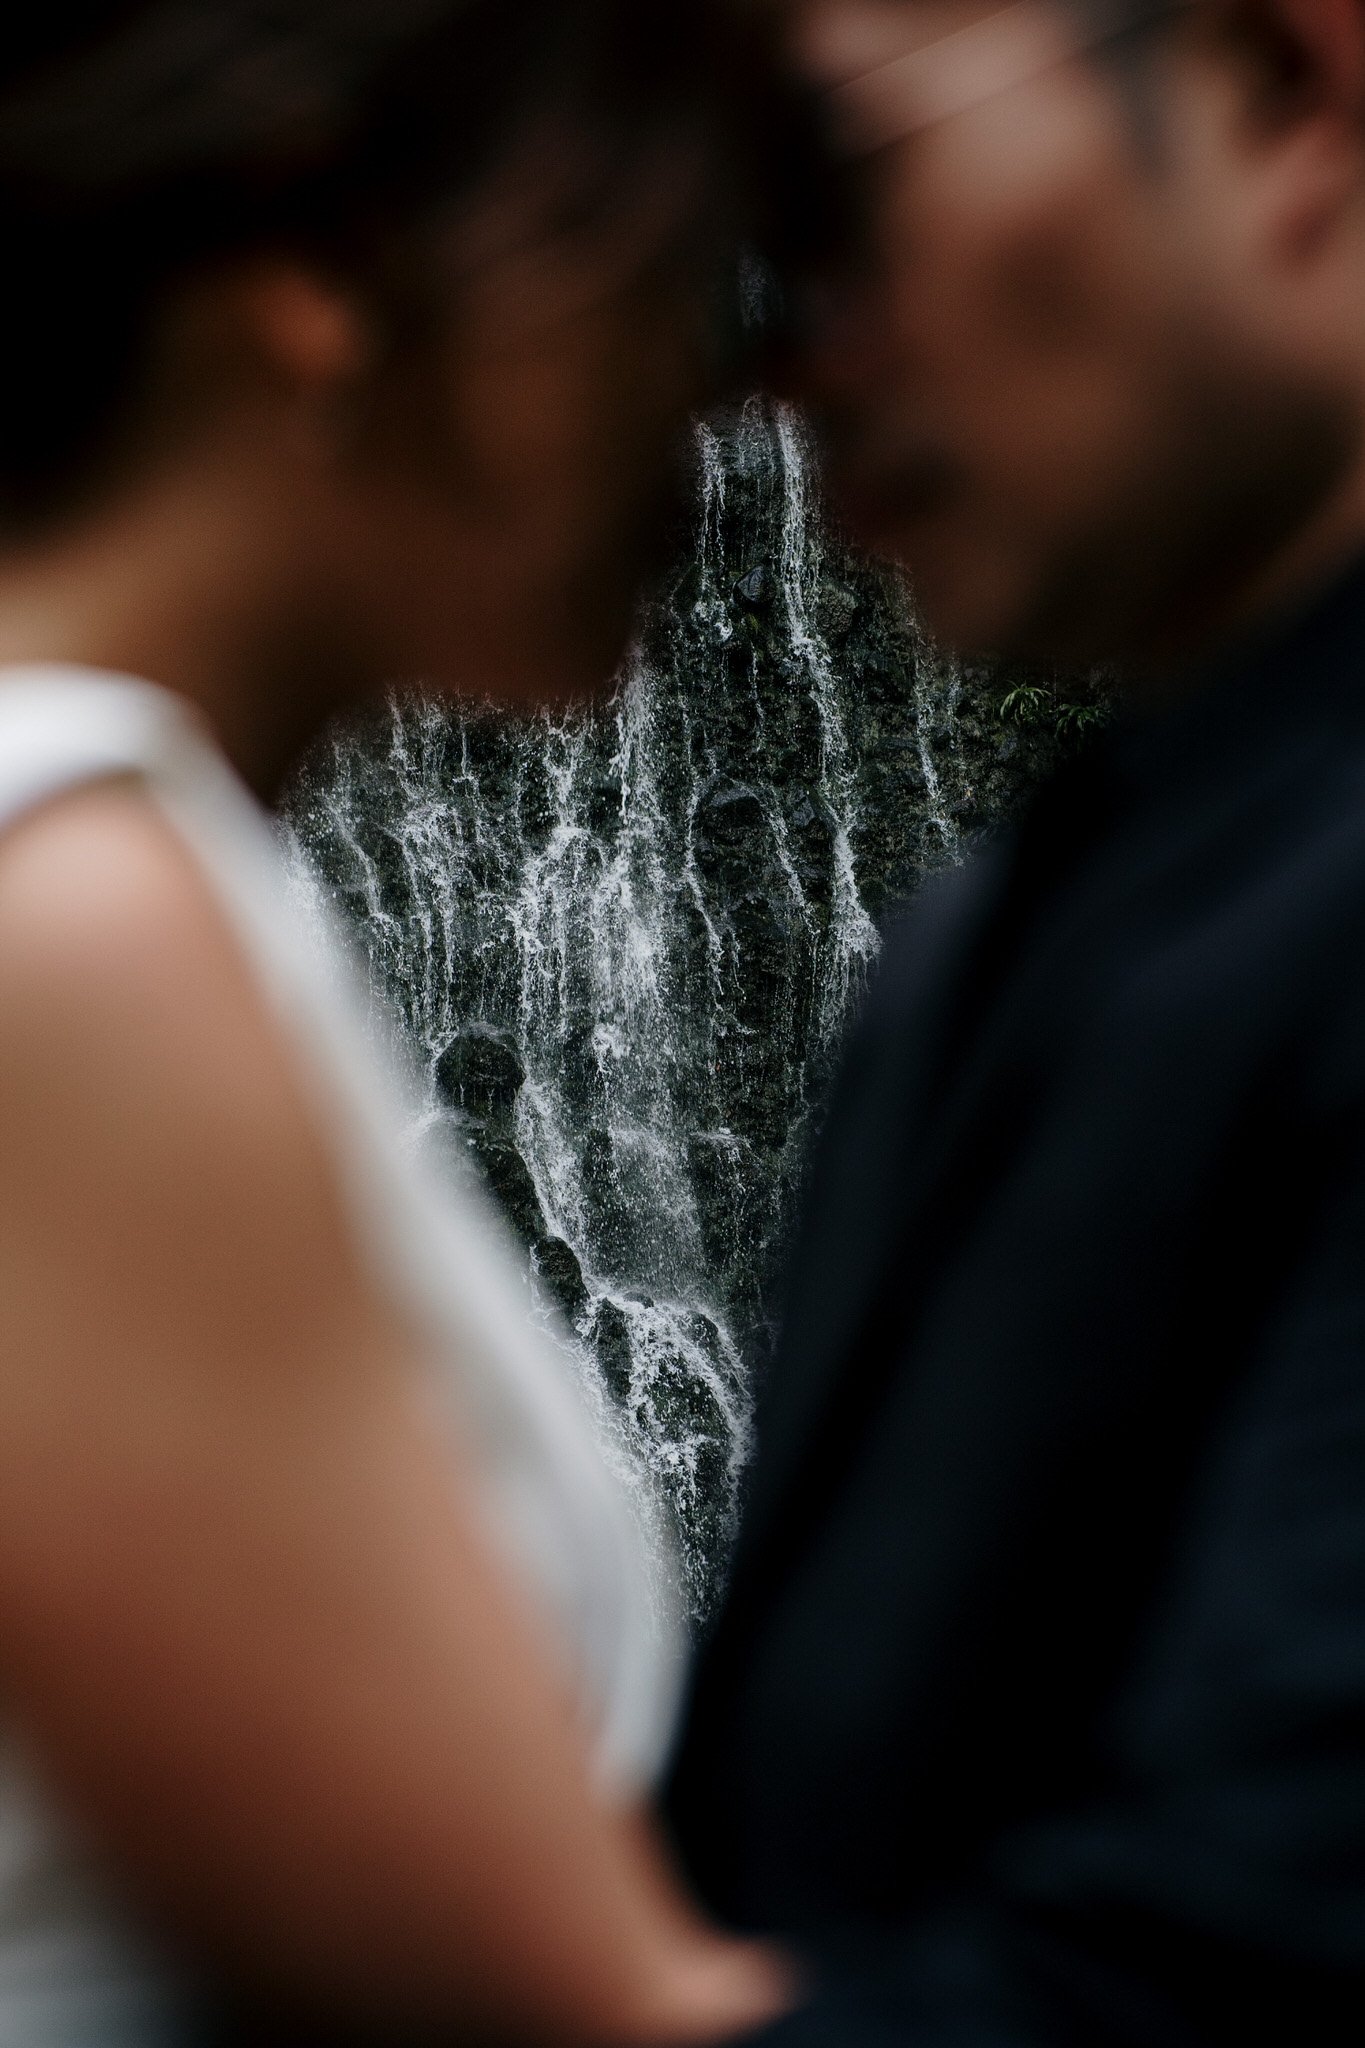 auckland-wedding-photographer-videographer-story-by-koo-koo's-jewelry-dear-white-productions-pre-wedding-engagement-photo-kare-karekare-falls-waterfall-beach-west-piha-muriwai-rain-night (21).JPG